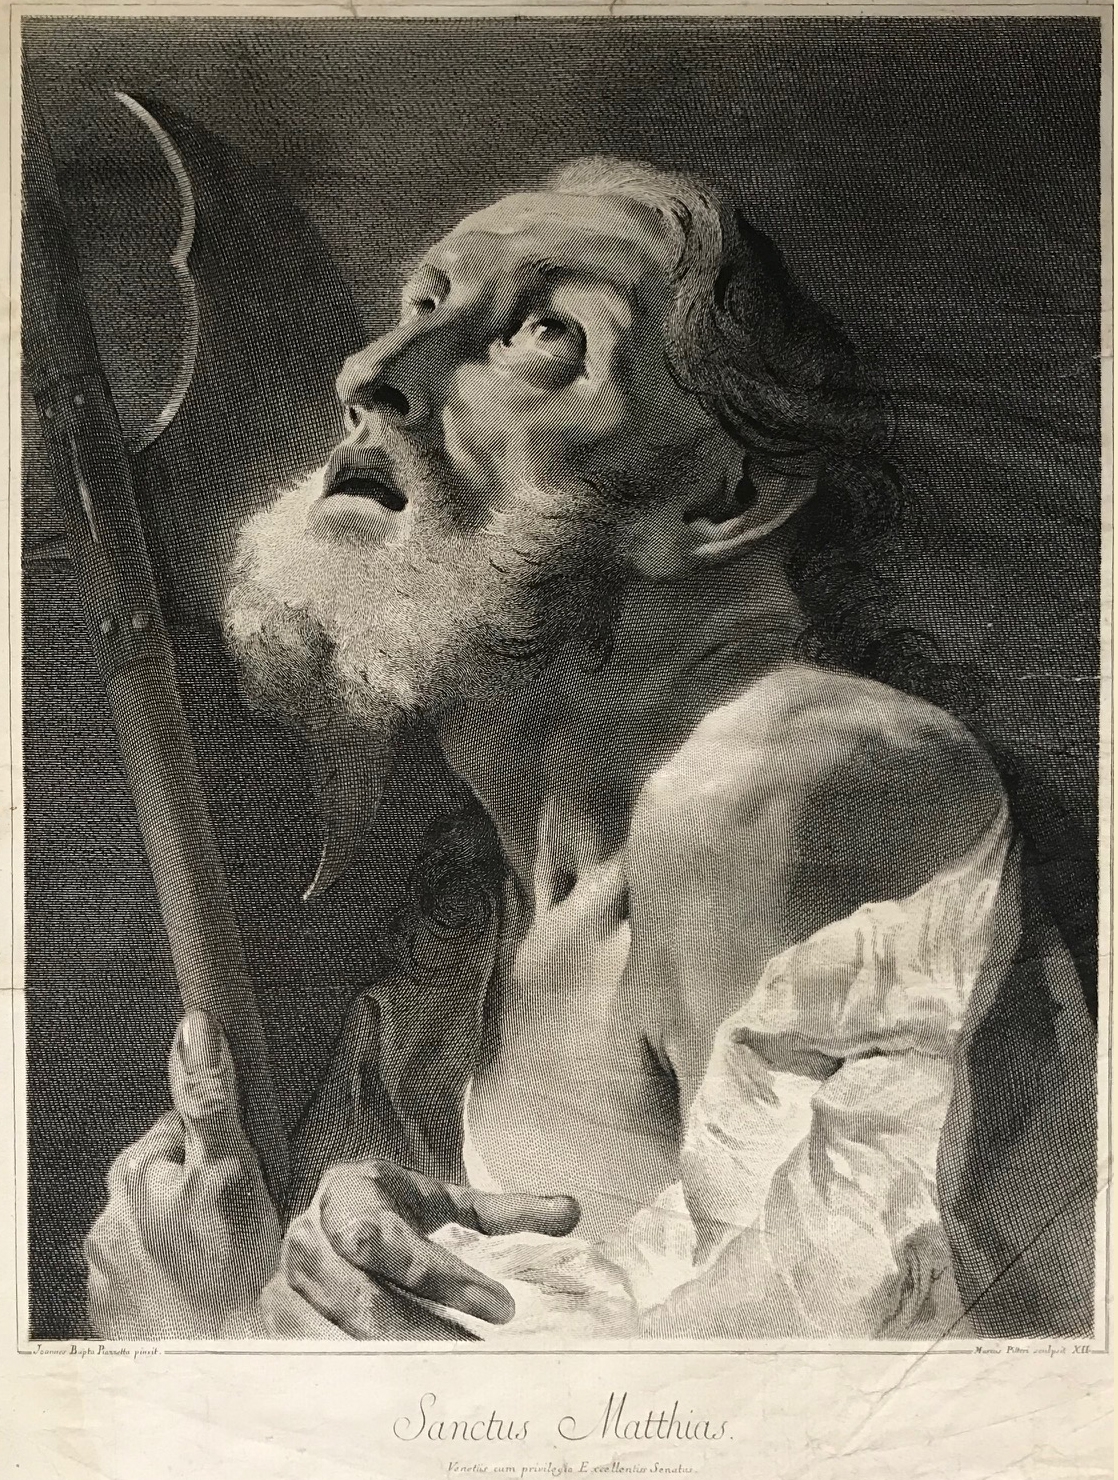 Sanctus Matthias by Giovanni Batista Piazetta, Marco Pitteri, 1742